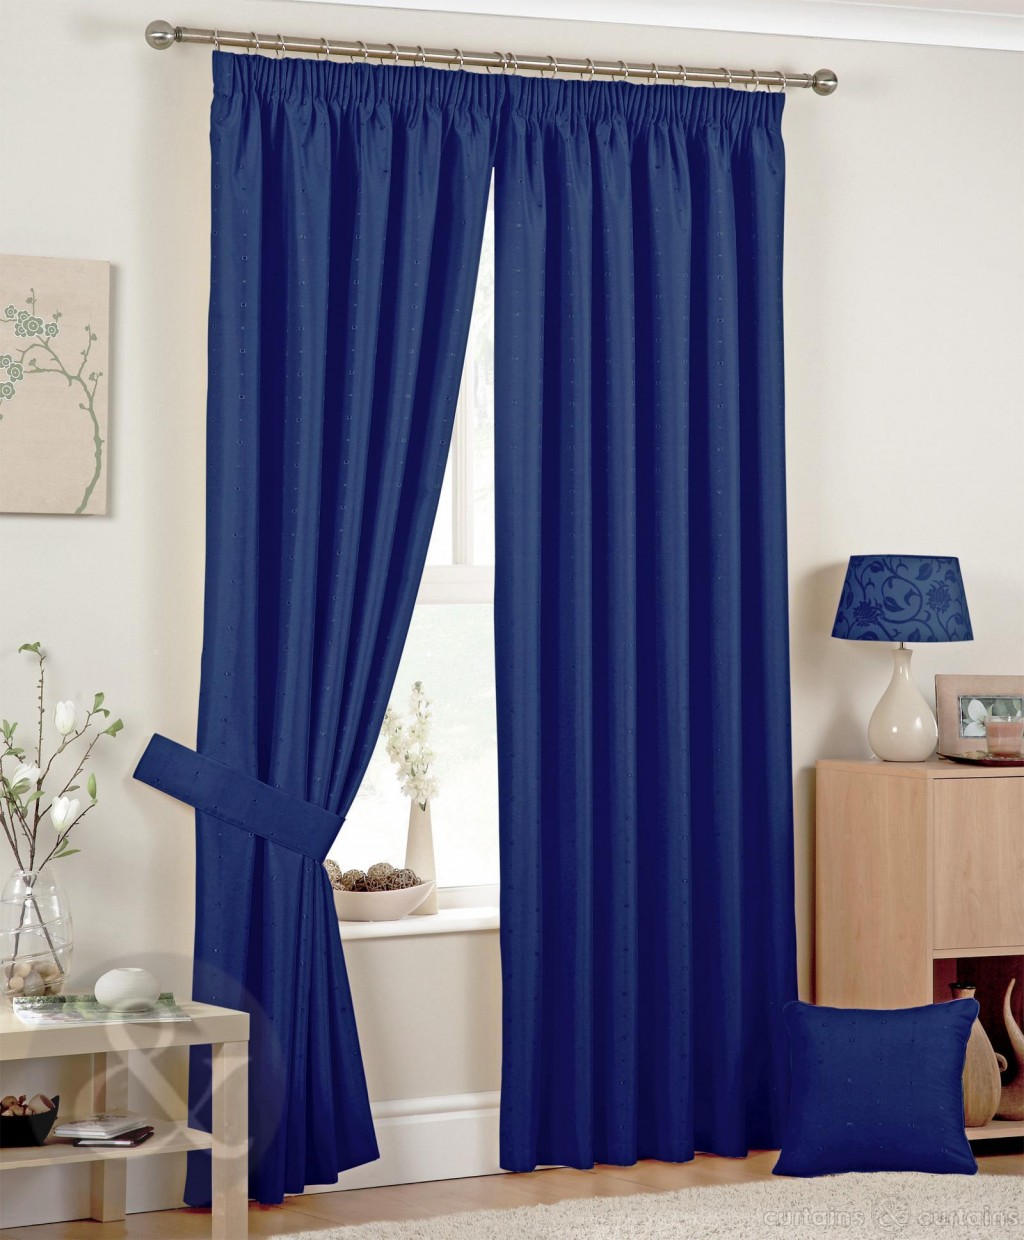 Blue Curtains in Curtain